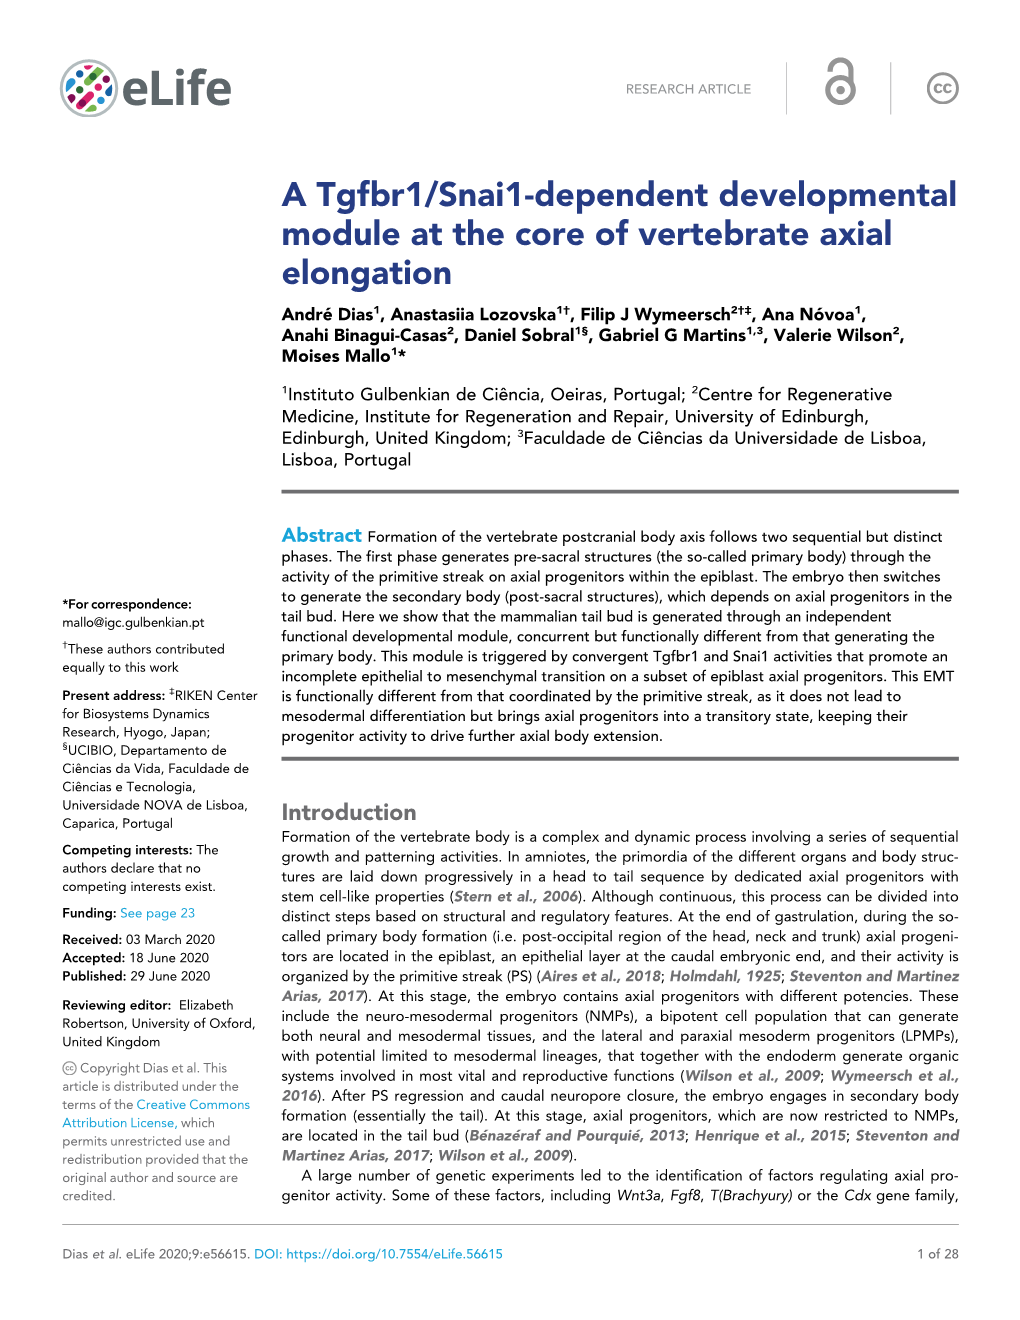 A Tgfbr1/Snai1-Dependent Developmental Module at the Core